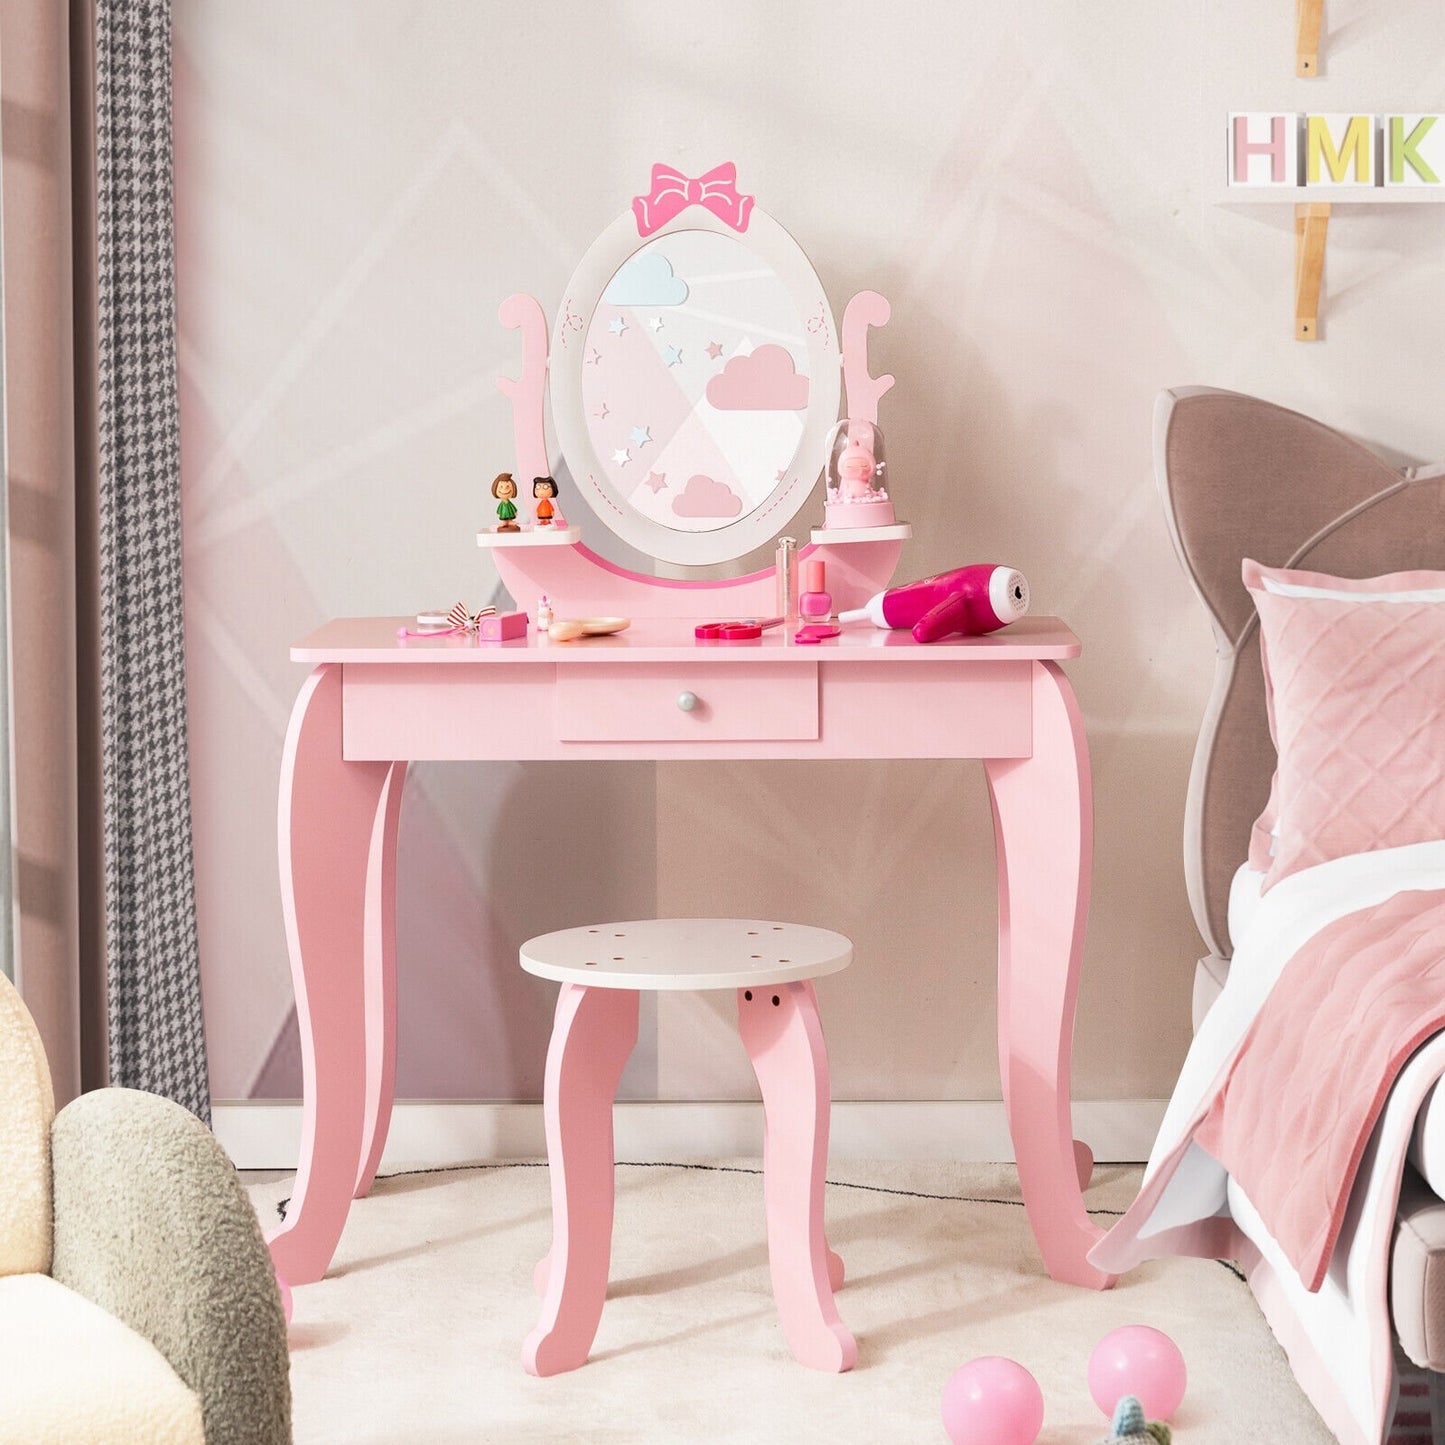 Kid Vanity Table Stool Set with Oval Rotatable Mirror, Pink